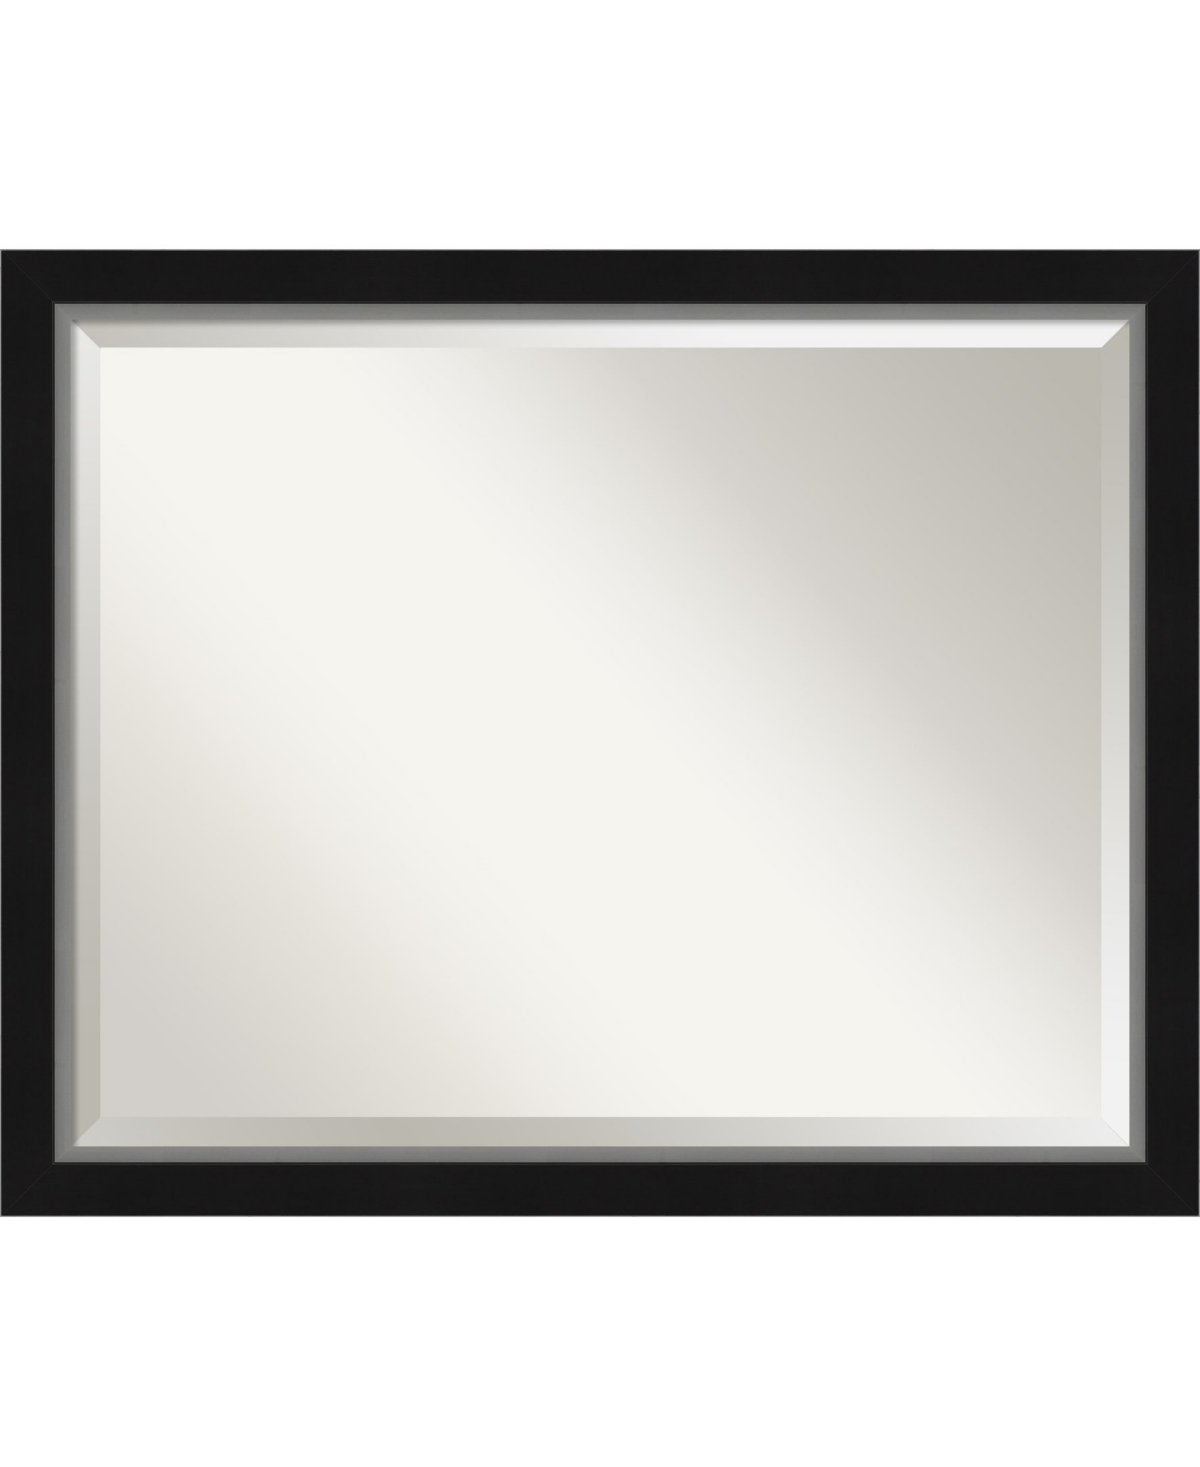 Eva Silver-tone Framed Bathroom Vanity Wall Mirror, 31.12" x 25.12" - Black